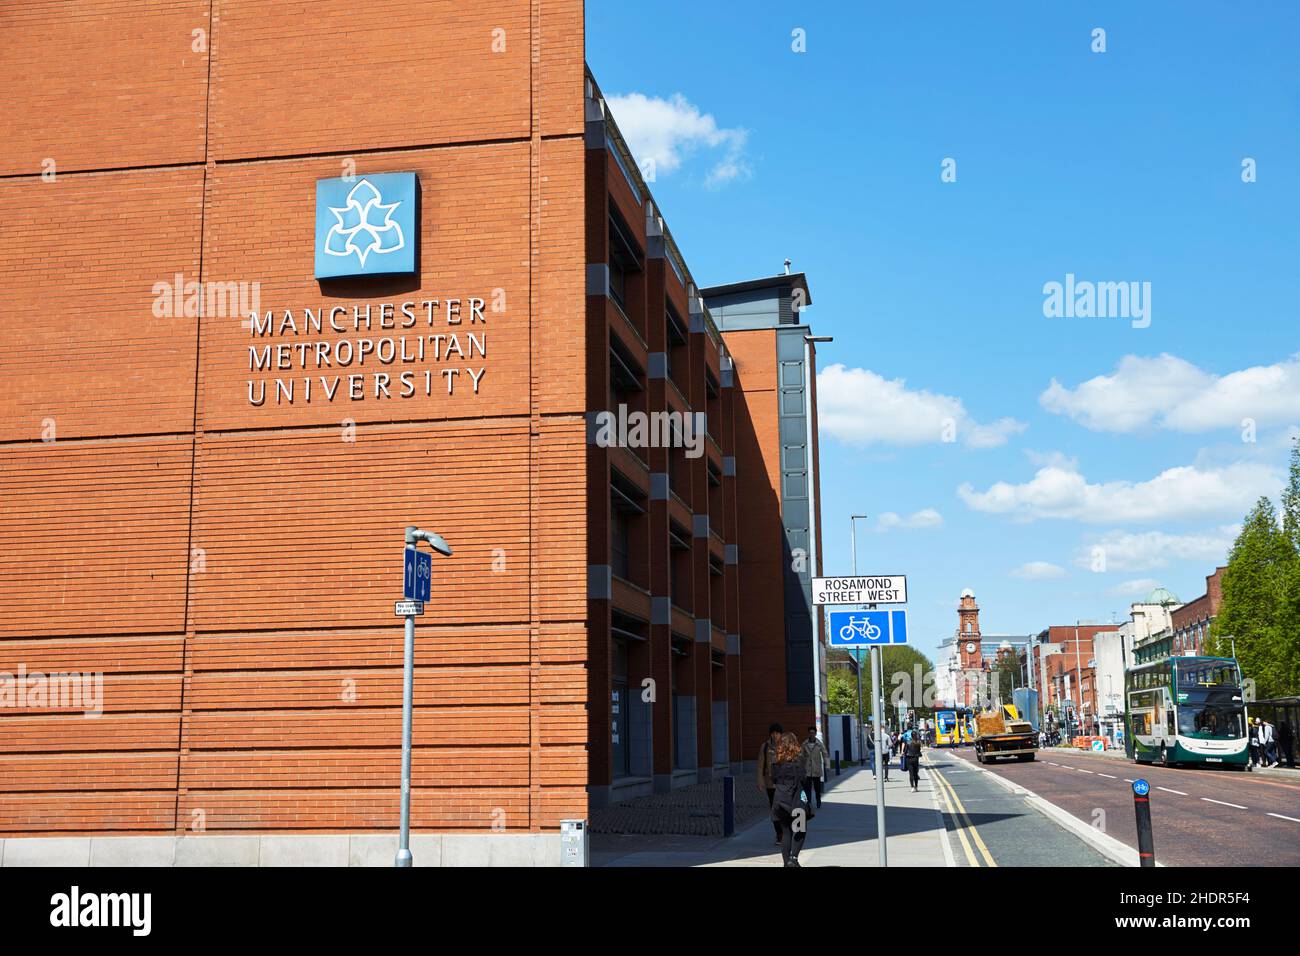 university, manchester metropolitain university, universities Stock Photo